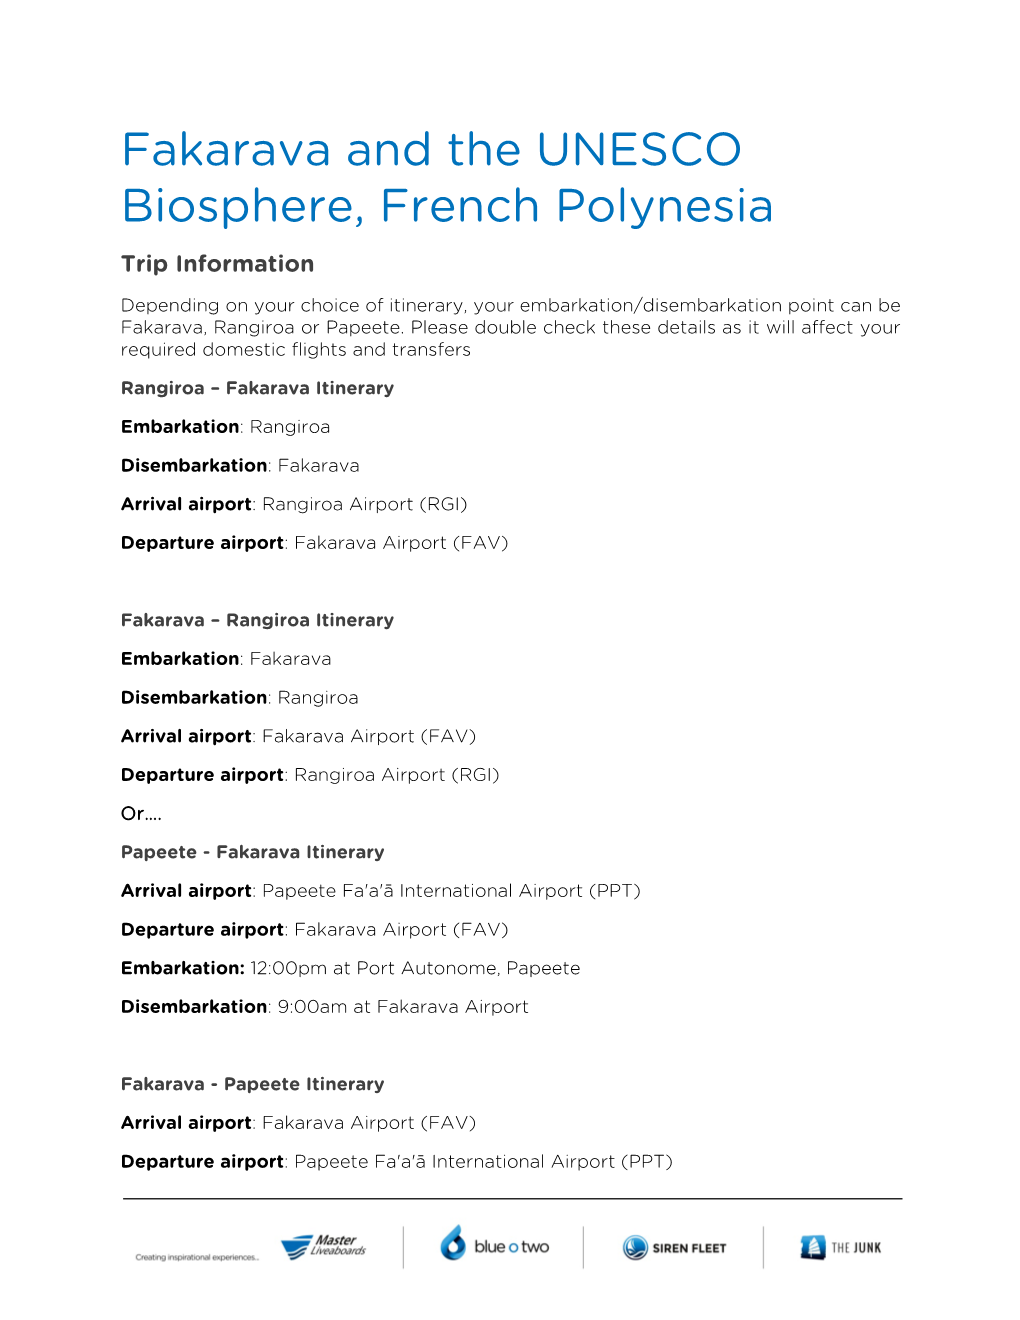 Fakarava and the UNESCO Biosphere, French Polynesia Trip Information